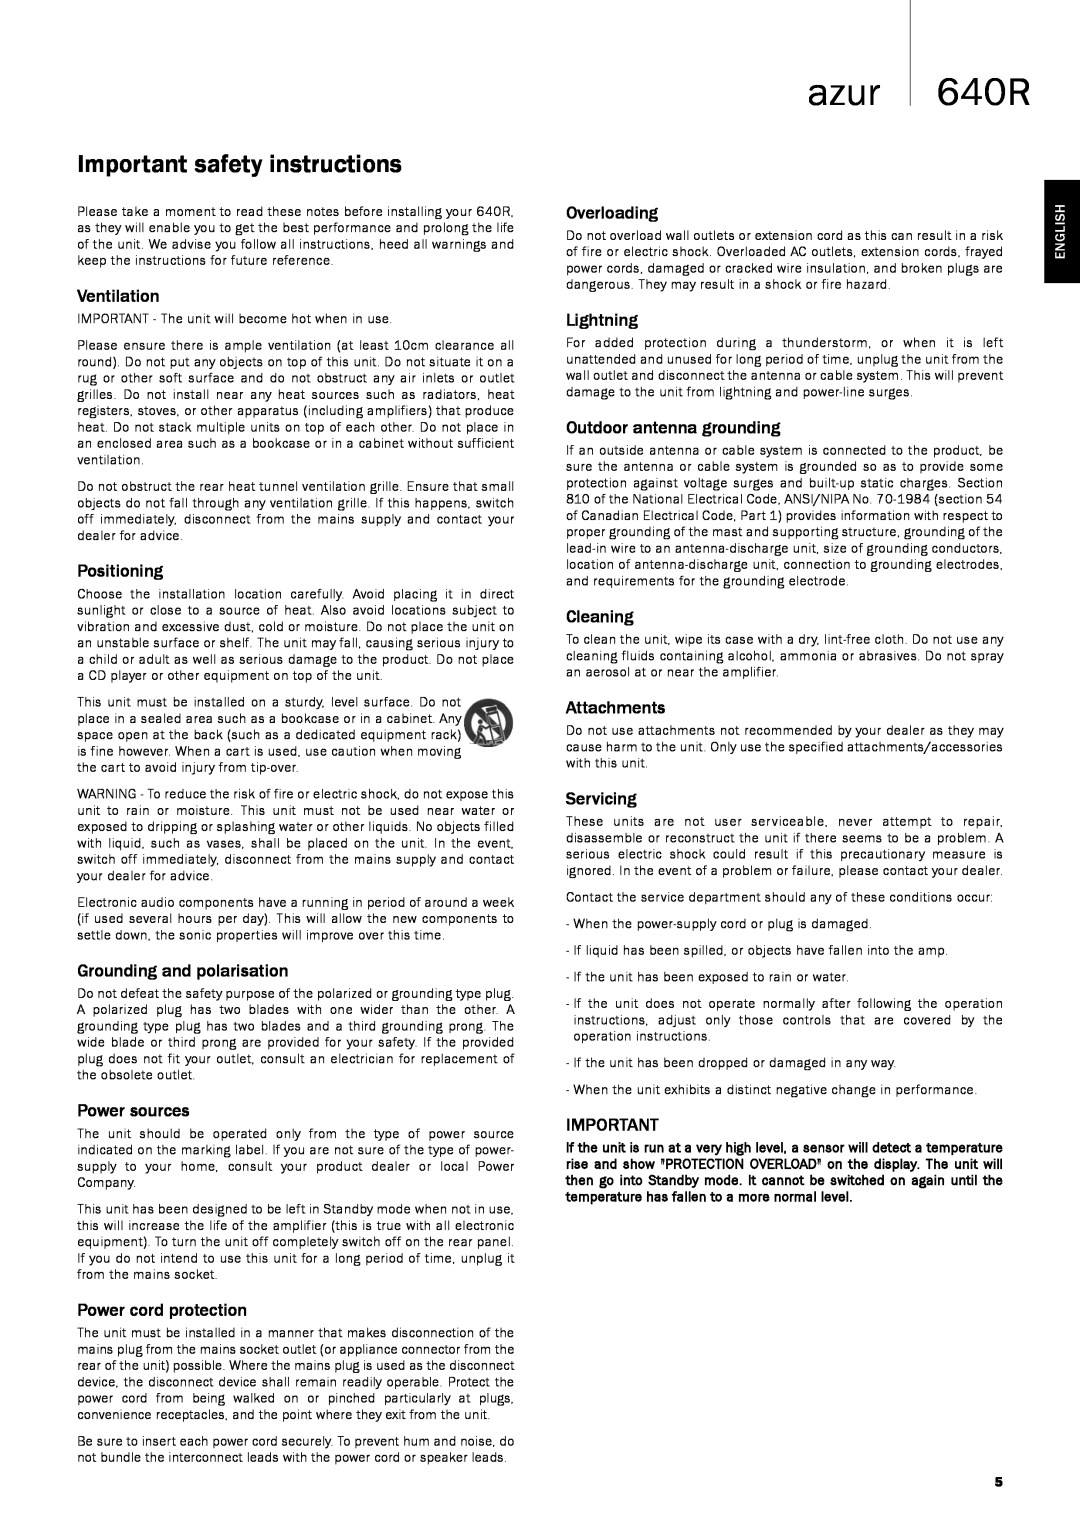 Cambridge Audio 640Razur user manual Important safety instructions, azur 640R 